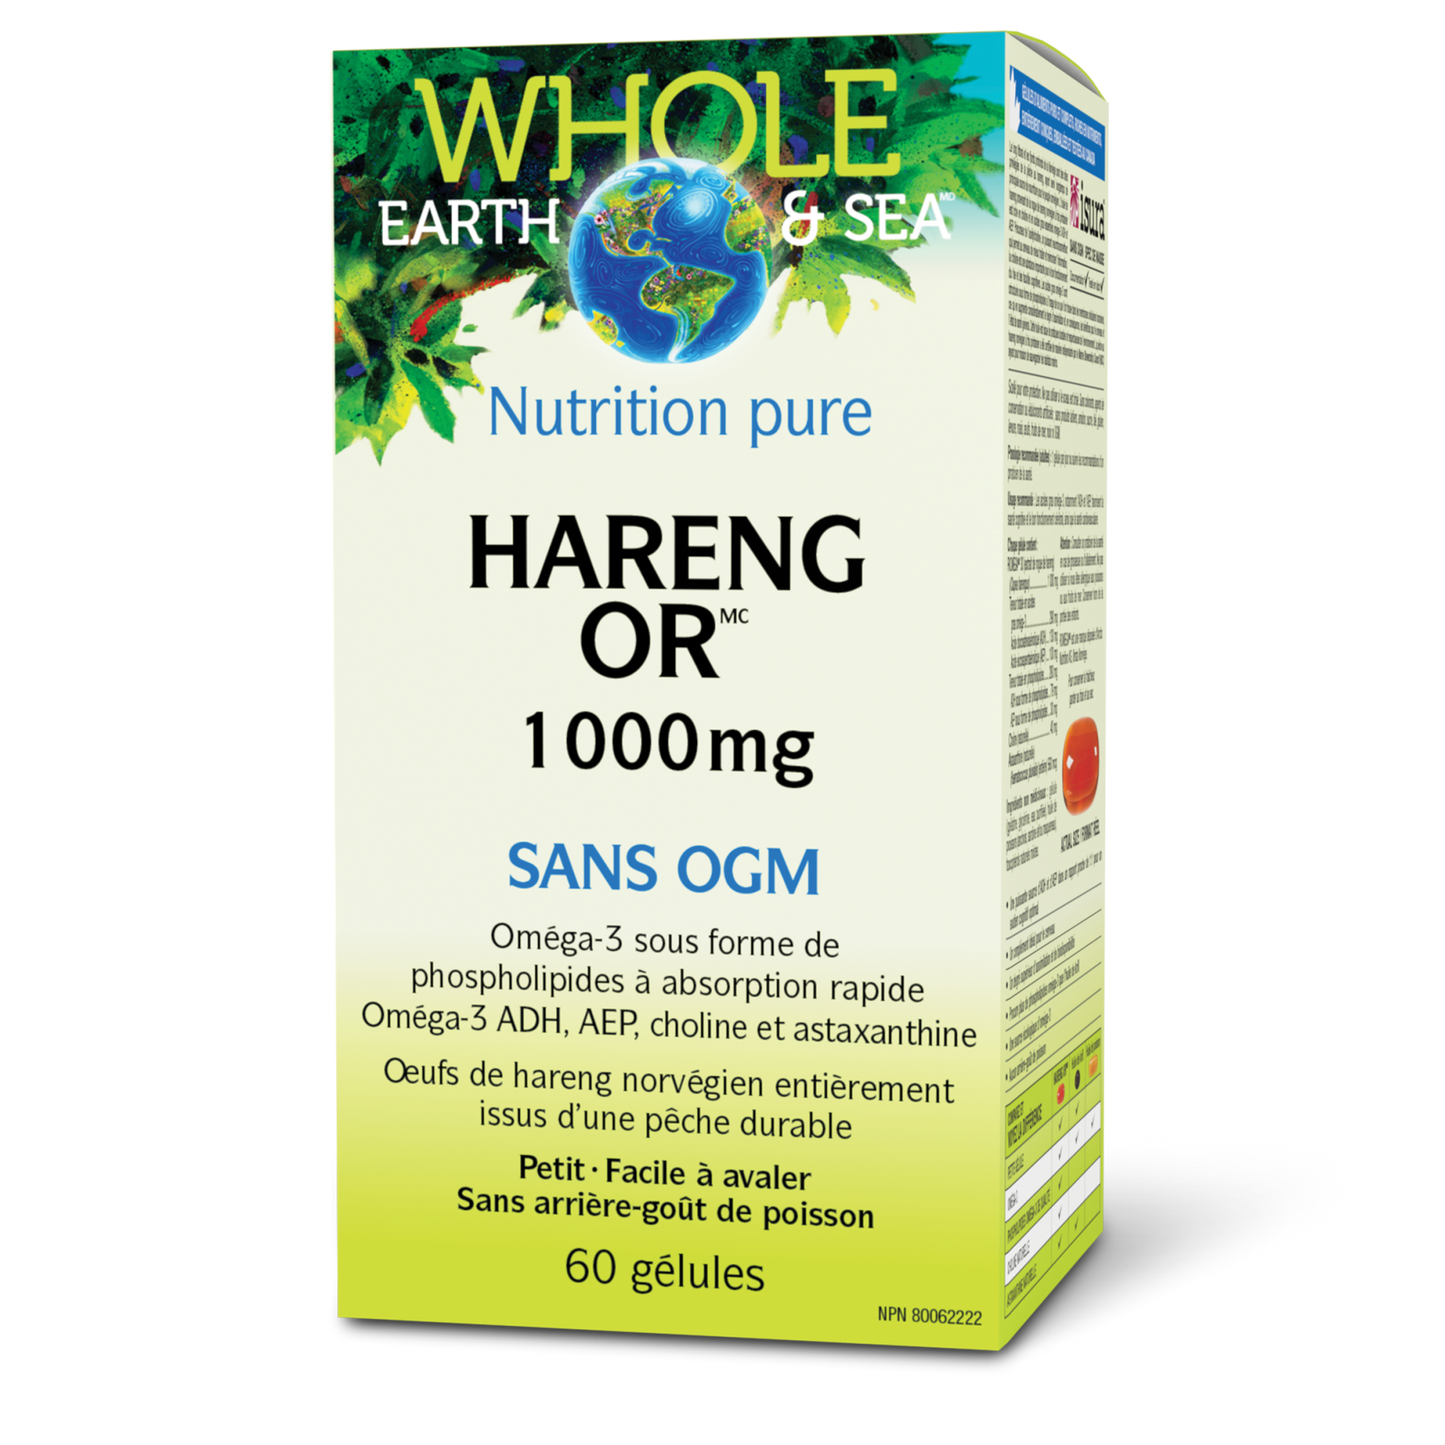 Hareng Or 1 000 mg, Whole Earth & Sea, Whole Earth & Sea®|v|image|35497